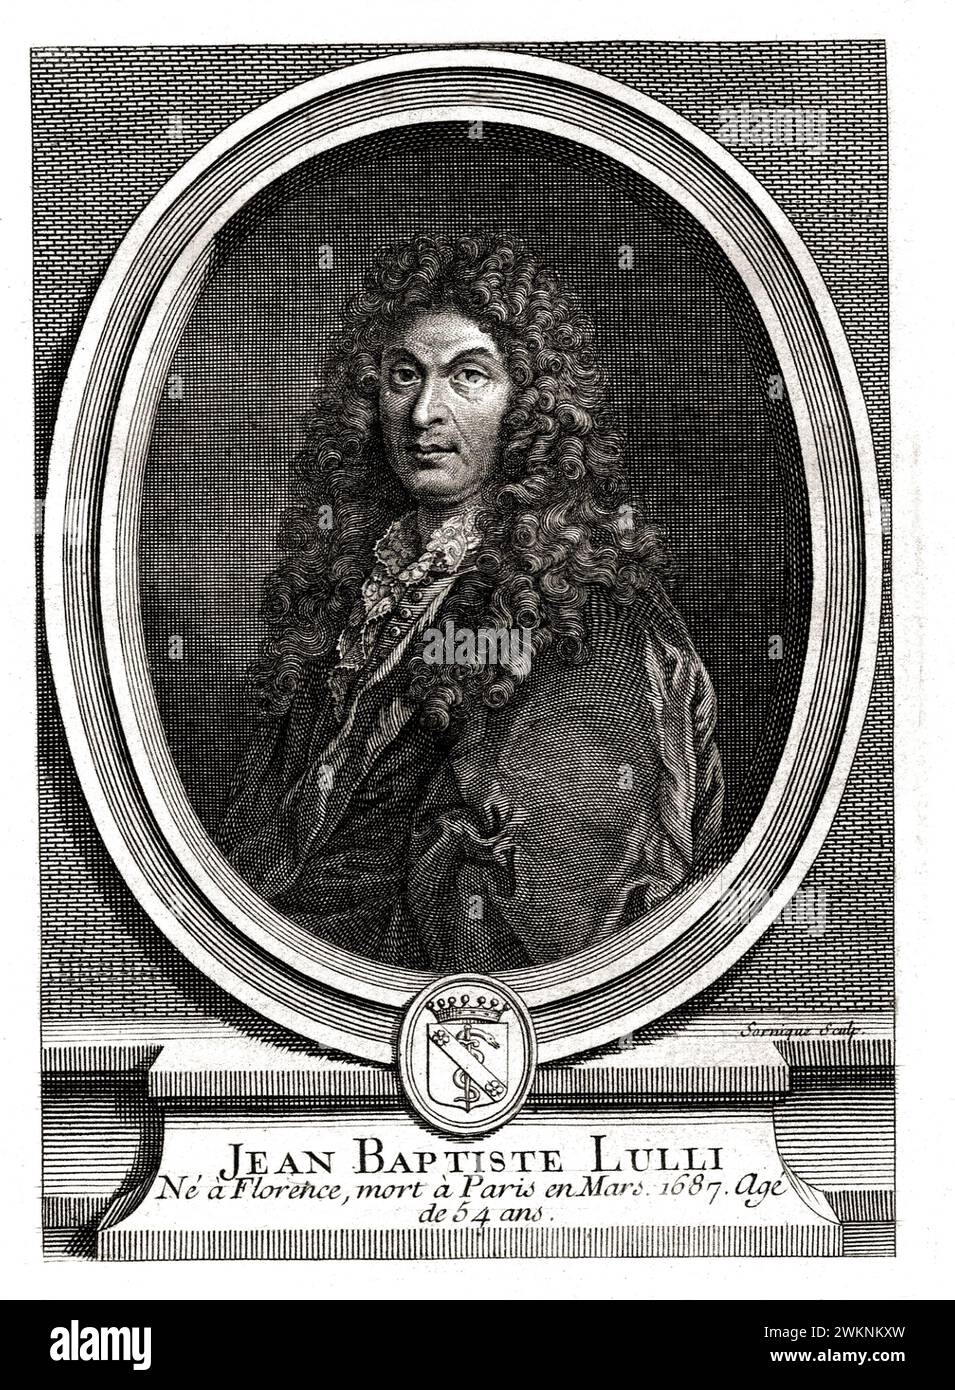 1670 ca, FRANCE : The italian- french baroque music composer Jean Baptiste LULLY  ( Giovanni Battista  LULLI , 1633 - 1687 ) at King LOUIS XIV court . Portait engraving by Sornique .  - Re Sole - Luigi XIV - BAROCCO - BAROQUE - musica classica barocca - CLASSICAL - MUSICA CLASSICA BAROCCA - classical - COMPOSITORE BAROCCO - BAROQUE - incisione - Granducato di Toscana - Giovanni Battista - Giovanbattista - Giovan Battista - GAY - omosessuale - omosessualità - homosexuality - homosexual - GLBTQ - curls - riccioli - boccoli - parrucca - wig - curling  --- Archivio GBB / CONTRASTO Stock Photo